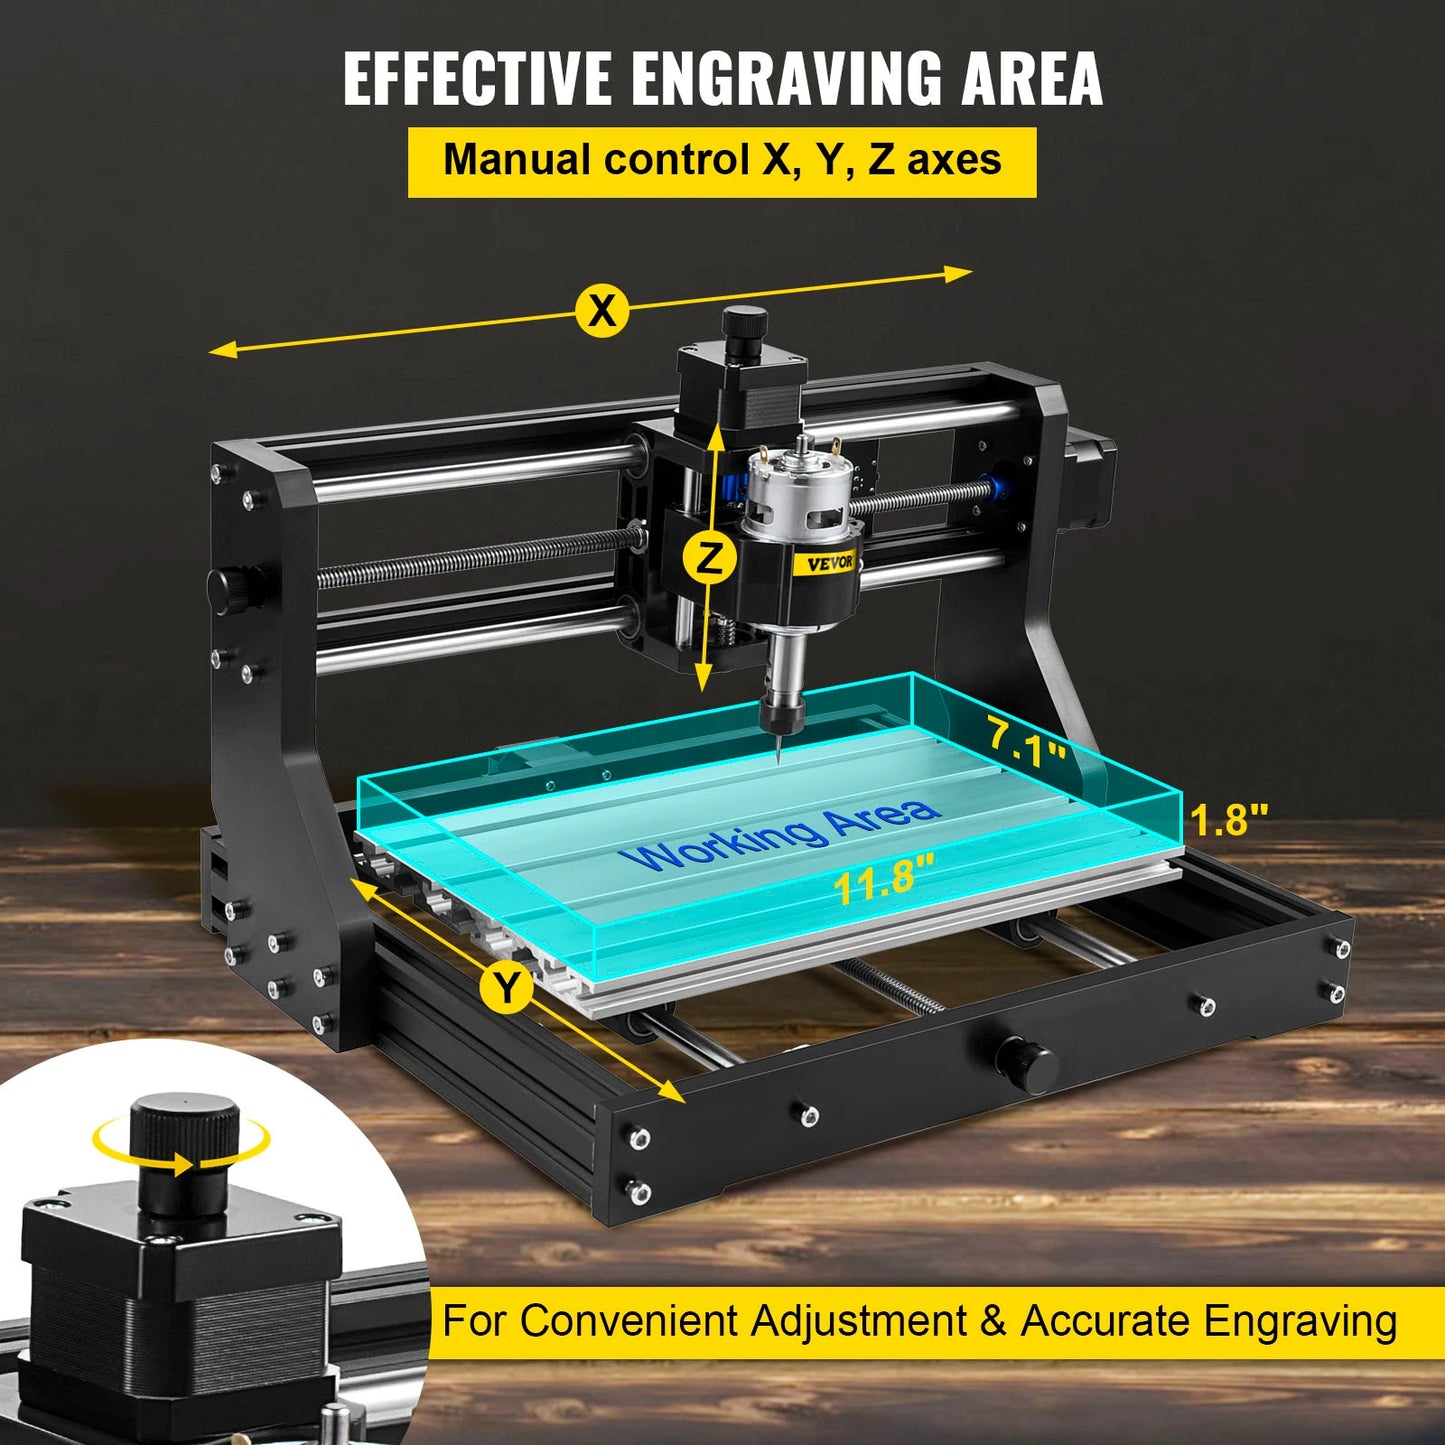 VEVOR CNC 3018 Pro Mini Laser Engraving Machine 3 Axis w/ Offline Controller GRBL Control DIY Wood PCB Milling Cutting Engraver